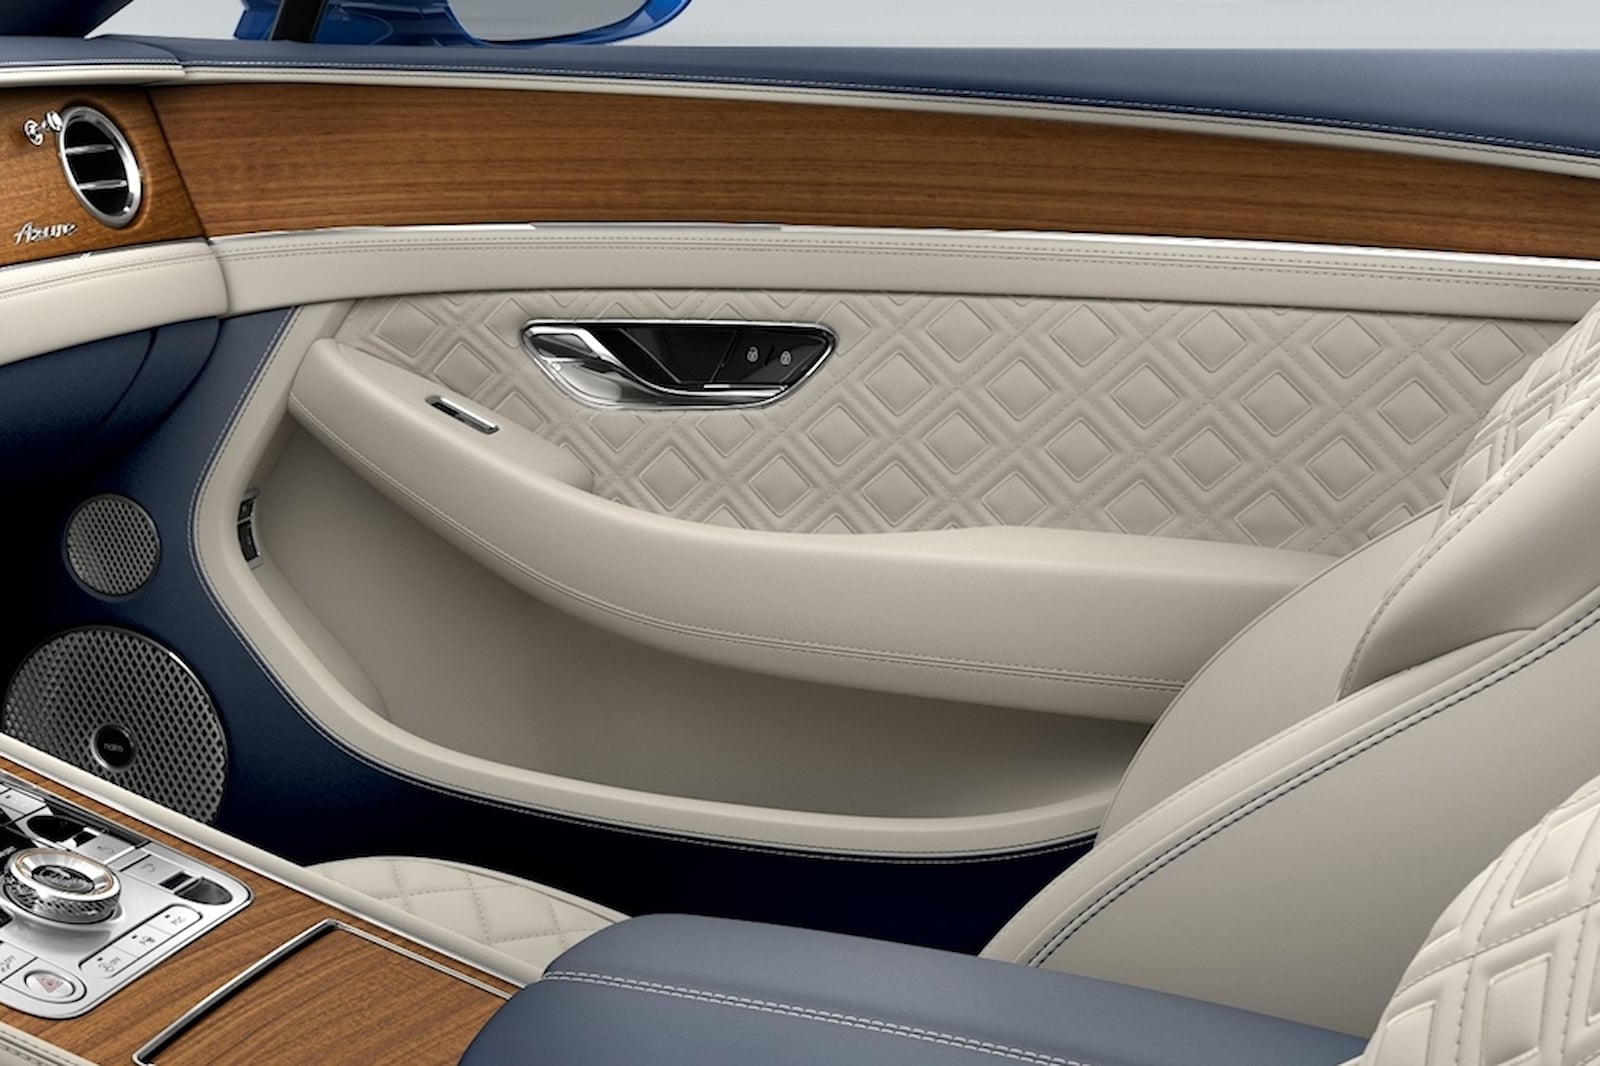 2023 Bentley Continental GT Interior Dimensions: Seating, Cargo